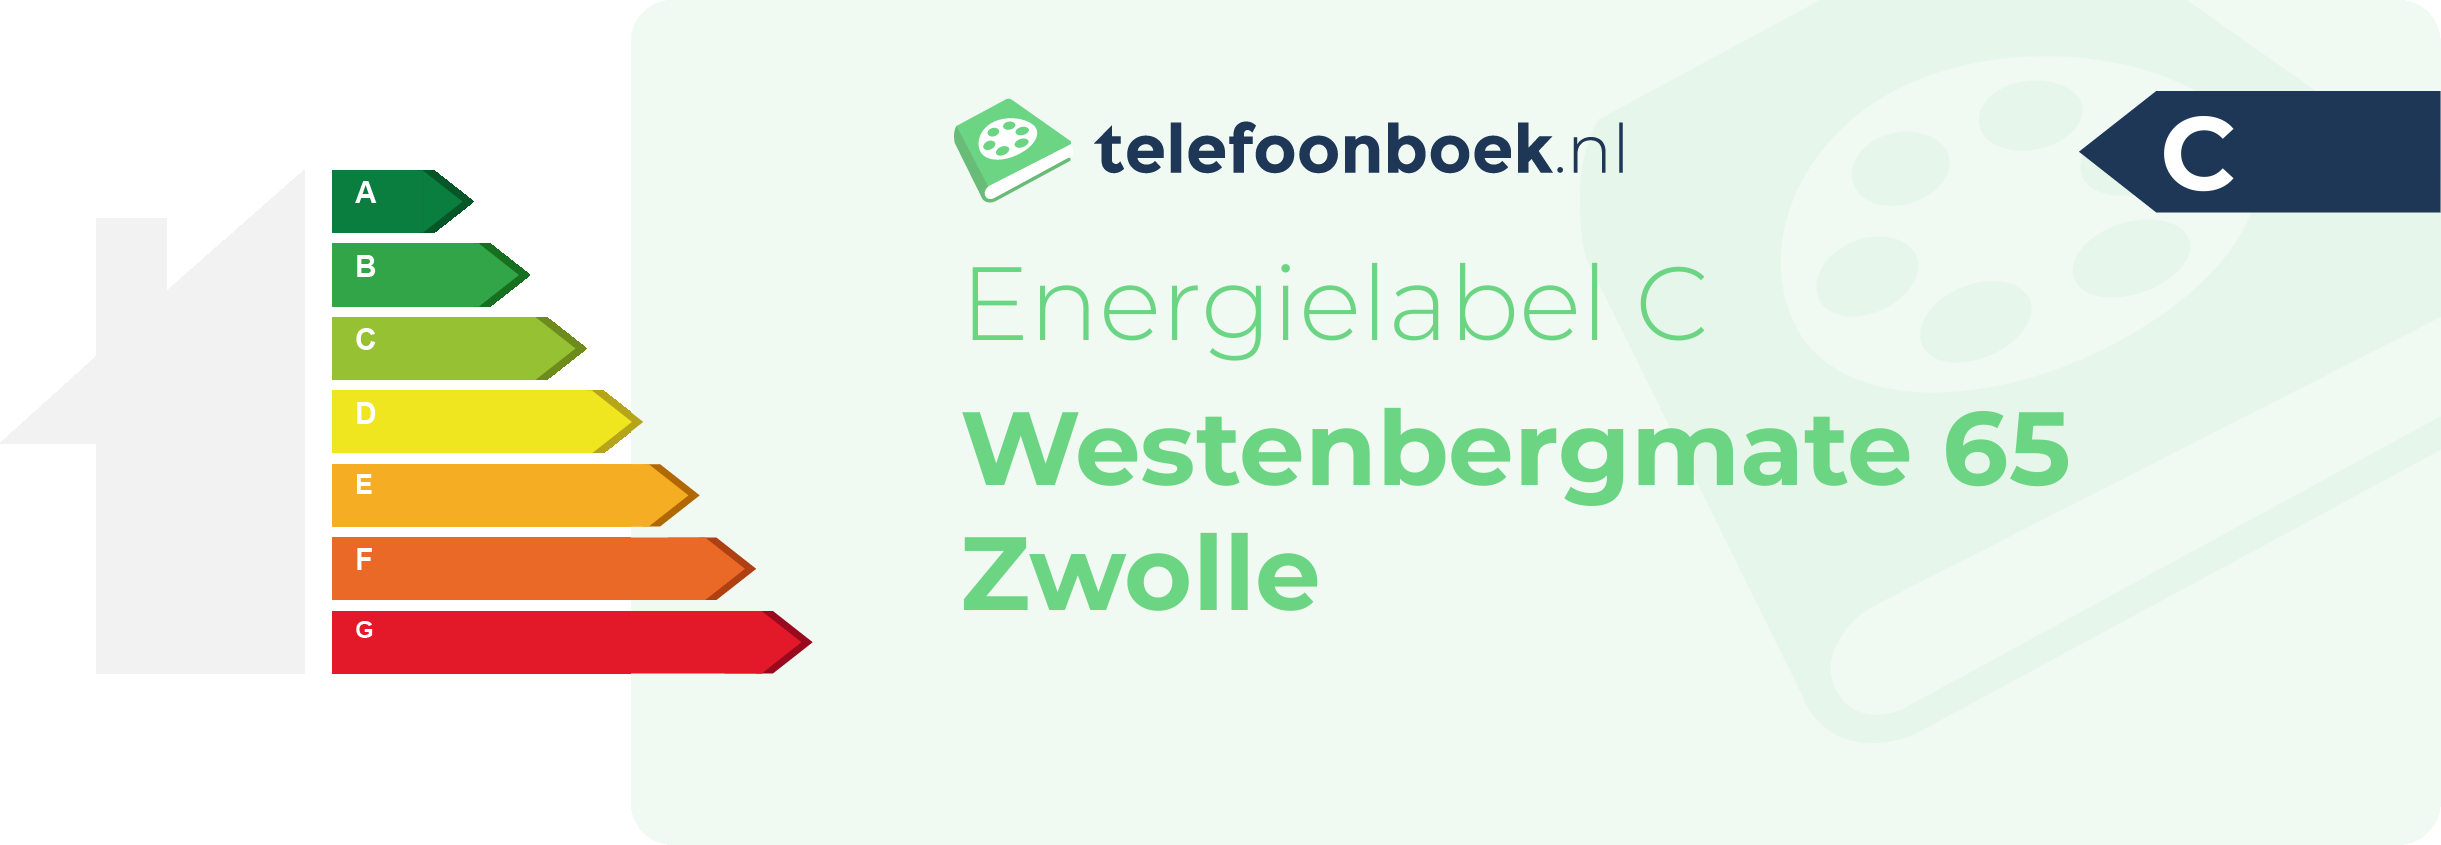 Energielabel Westenbergmate 65 Zwolle